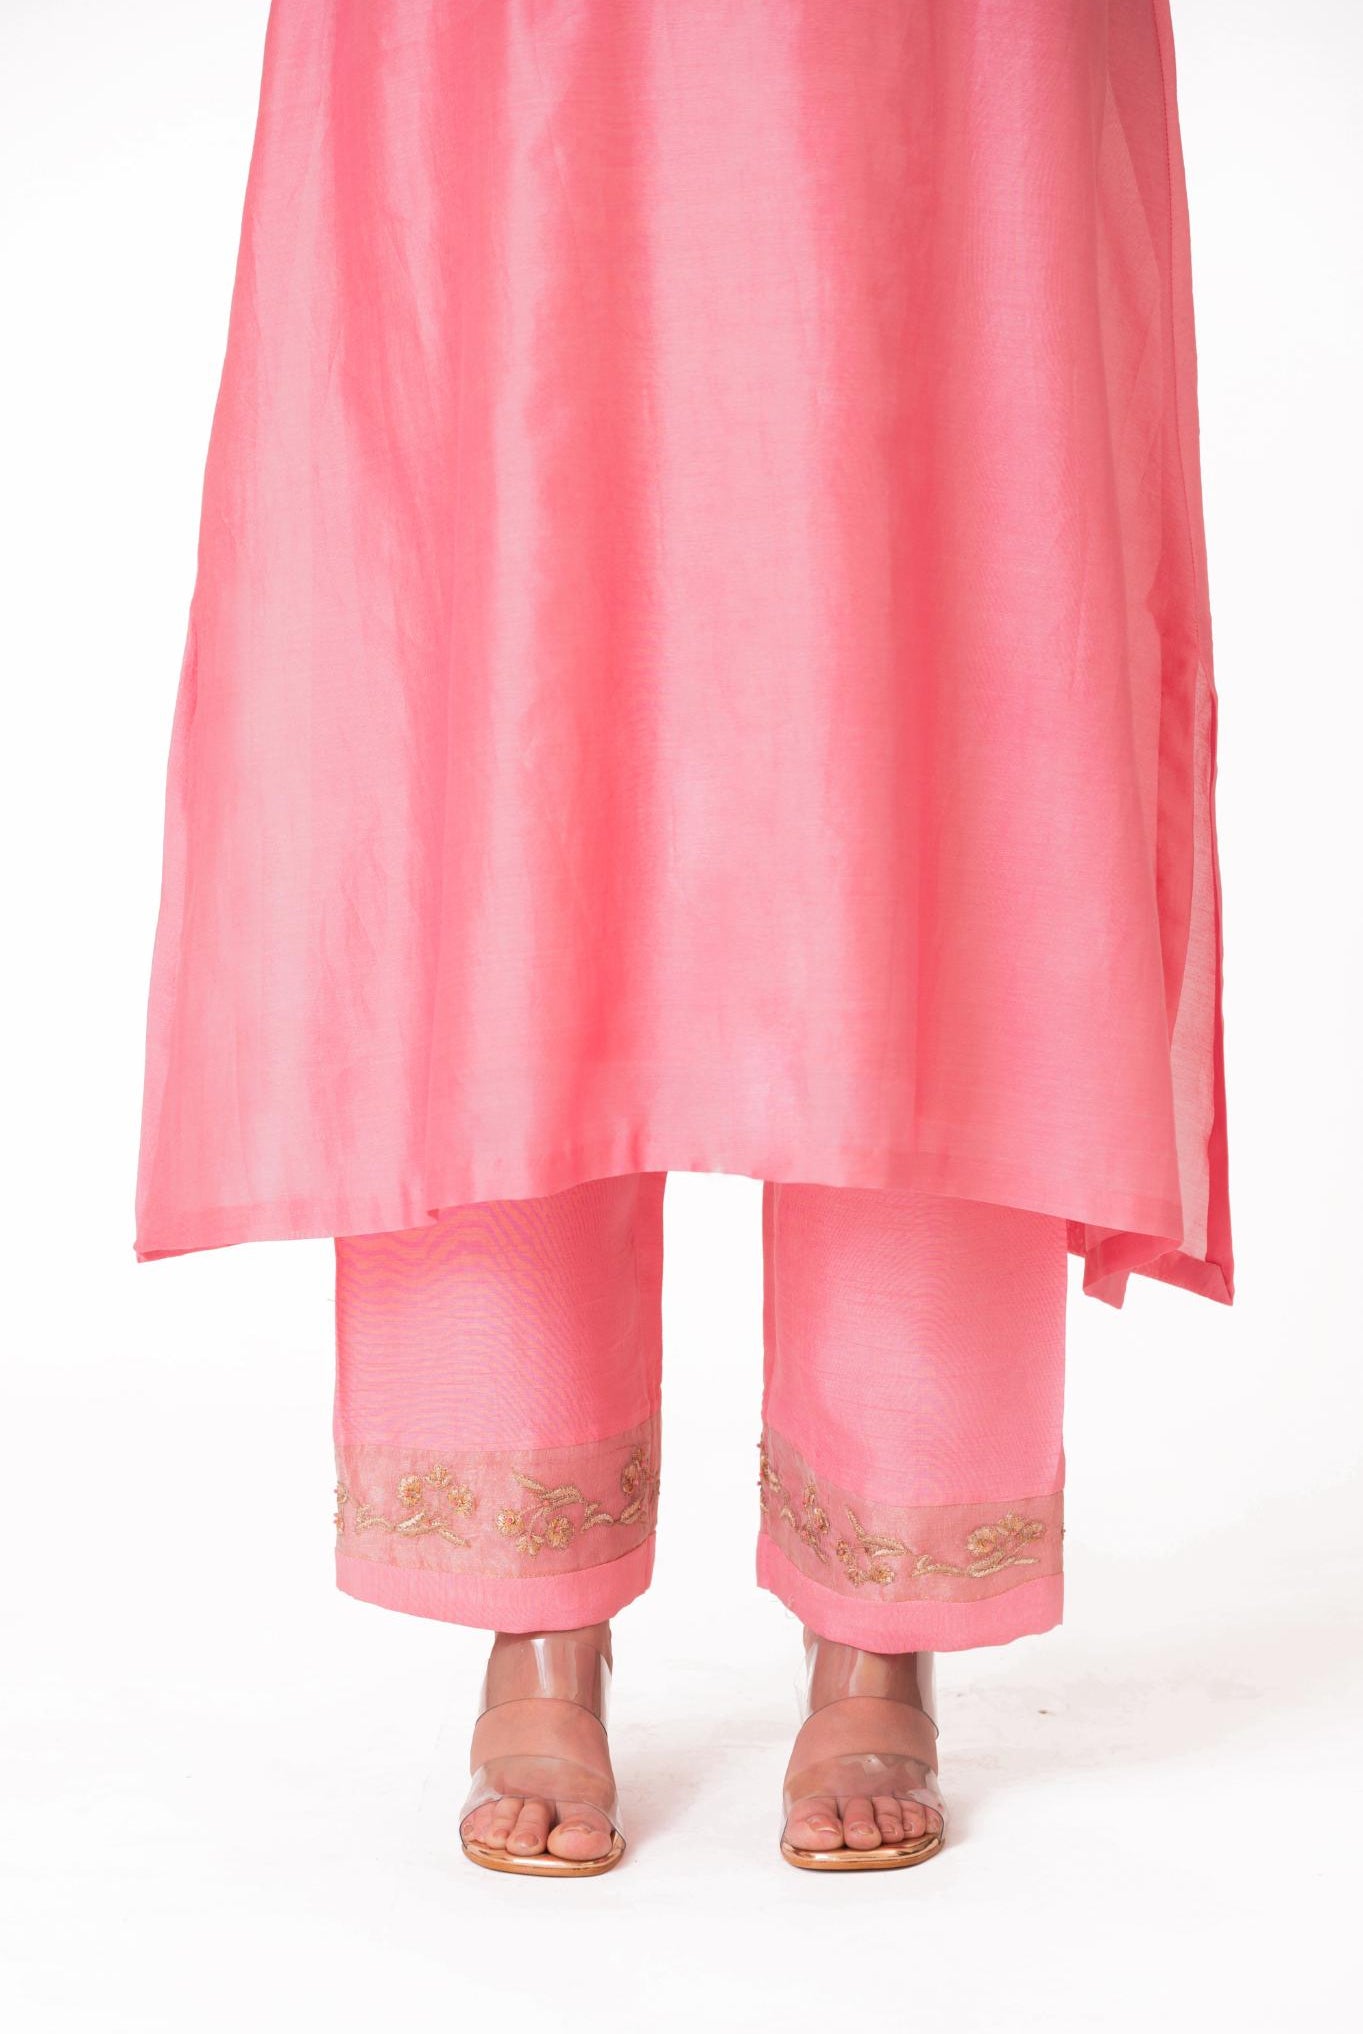 Tissue Patch Work Dupatta Kurta Set - Lotus Pink - CiceroniKurta Set, Festive wearBhavik Shah